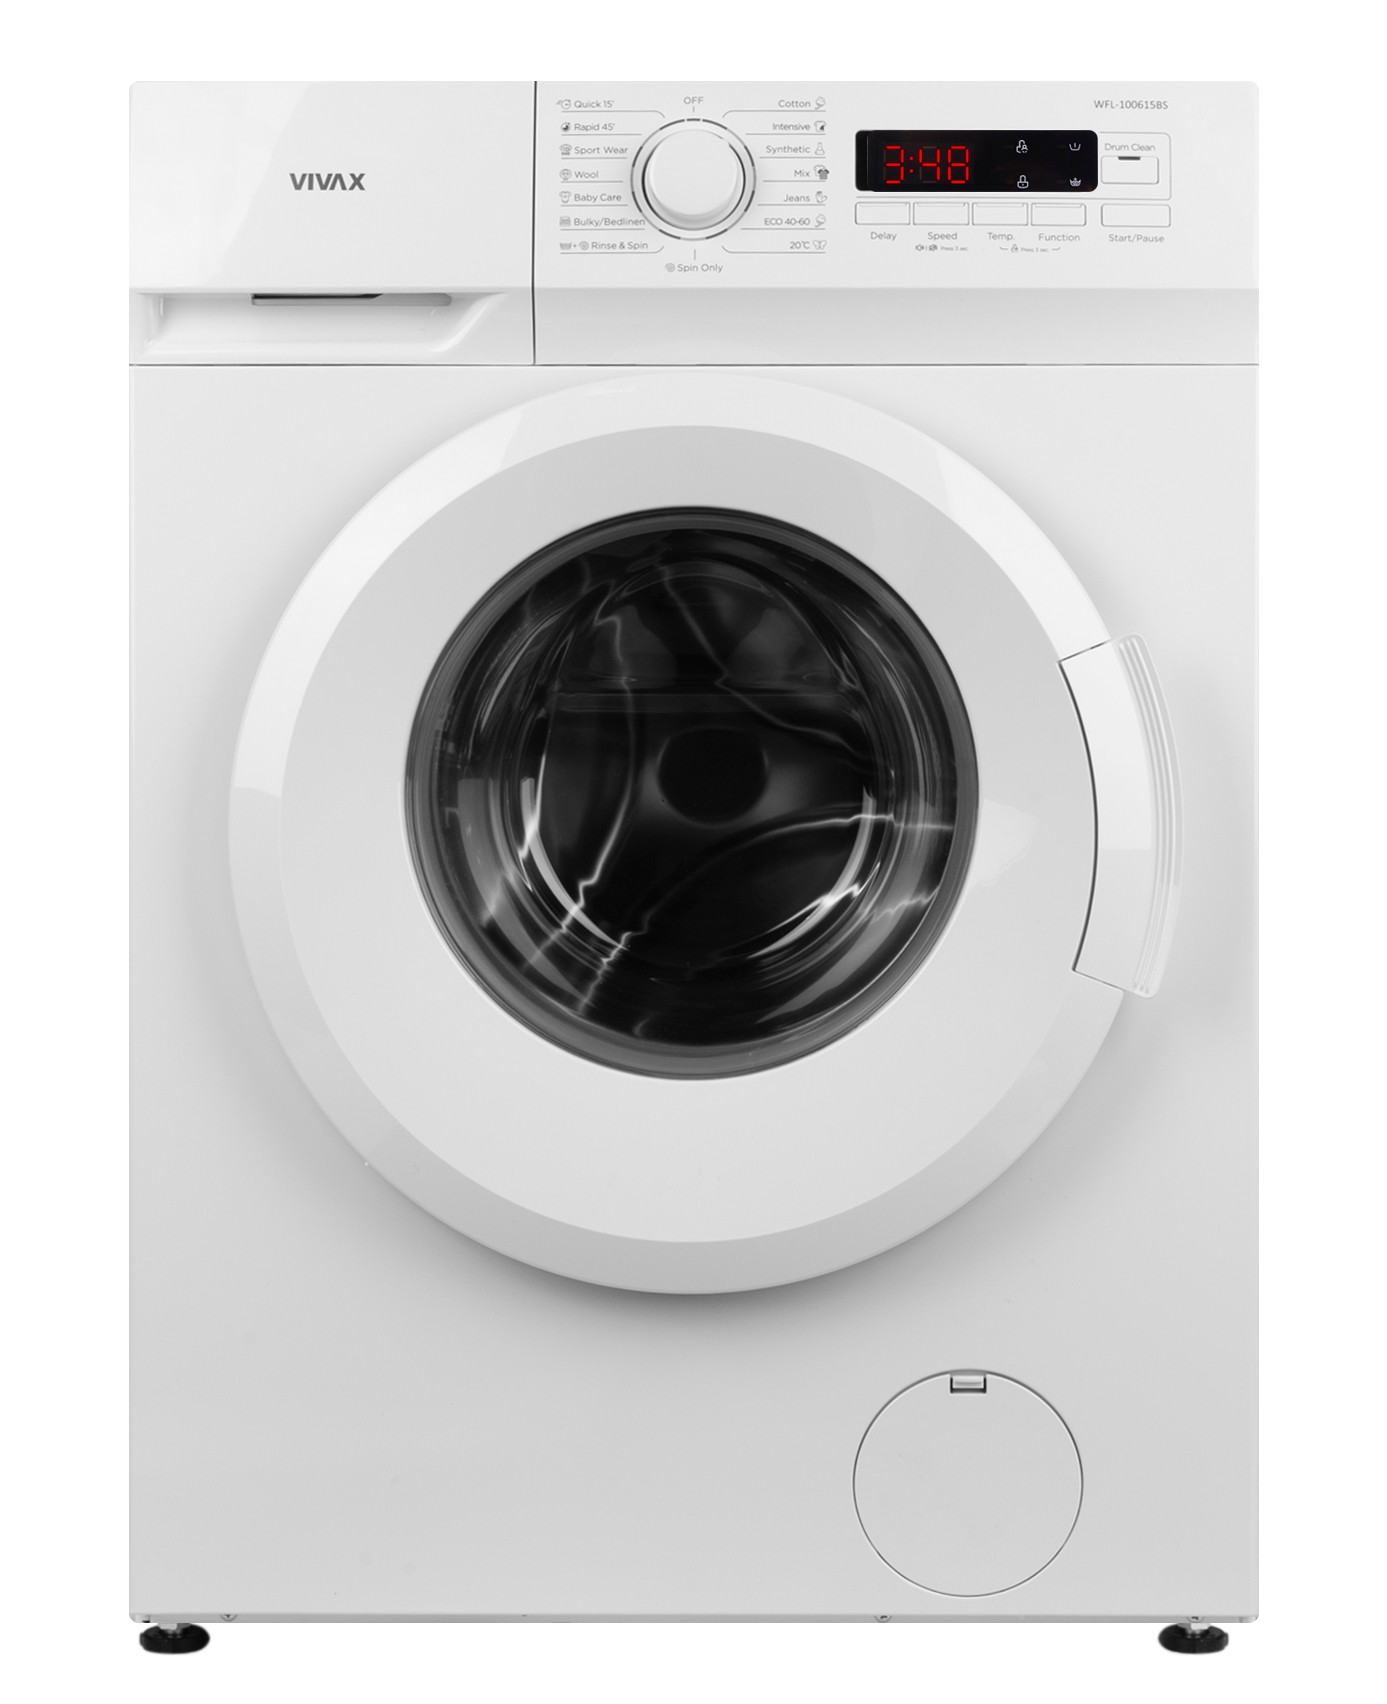 Цена стиральная машина Vivax WFL-100615BS в Днепре